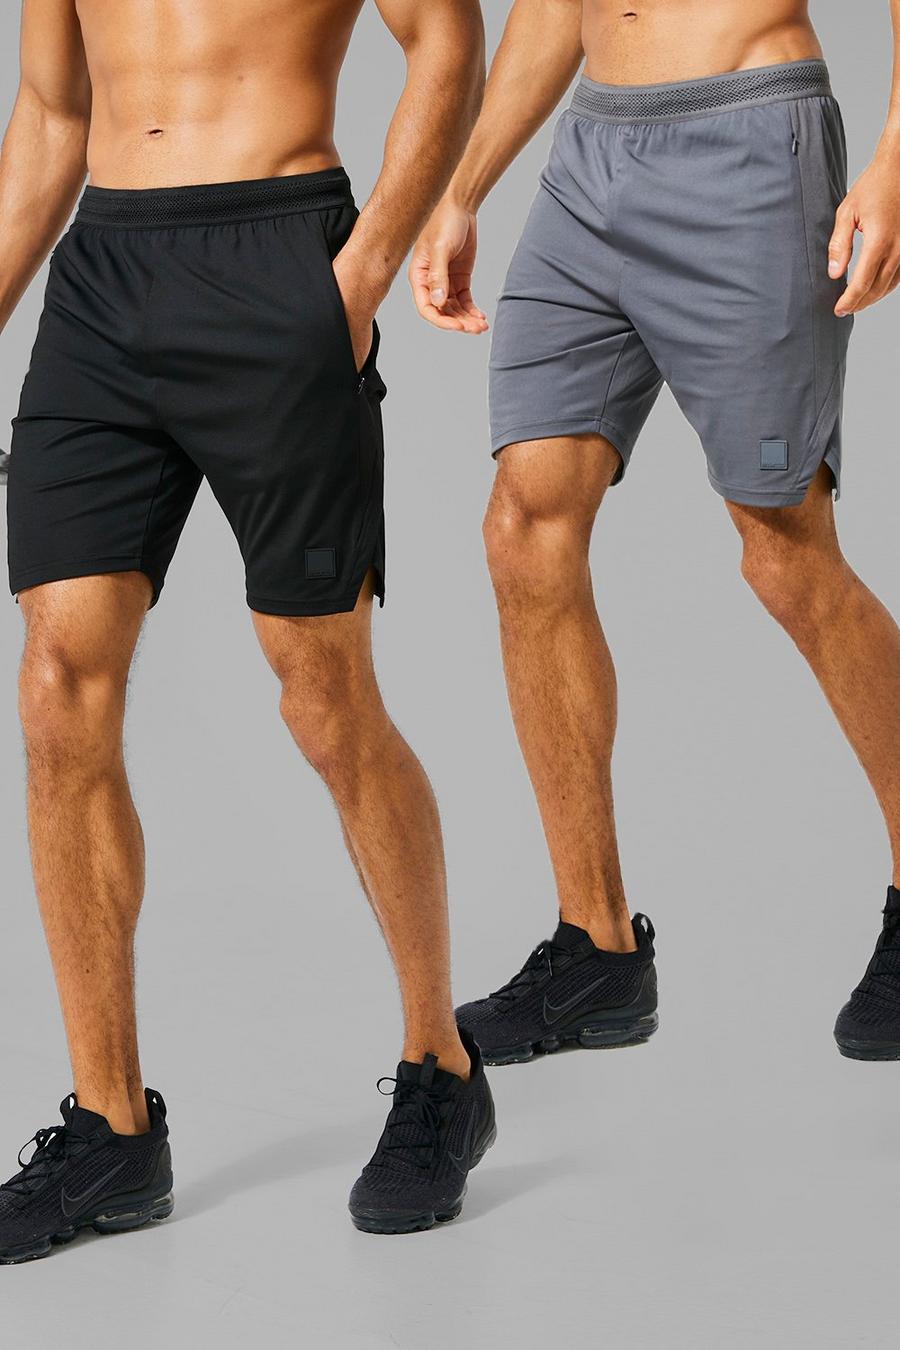 Pantaloncini per alta performance Man Active - set di 2 paia, Multi image number 1